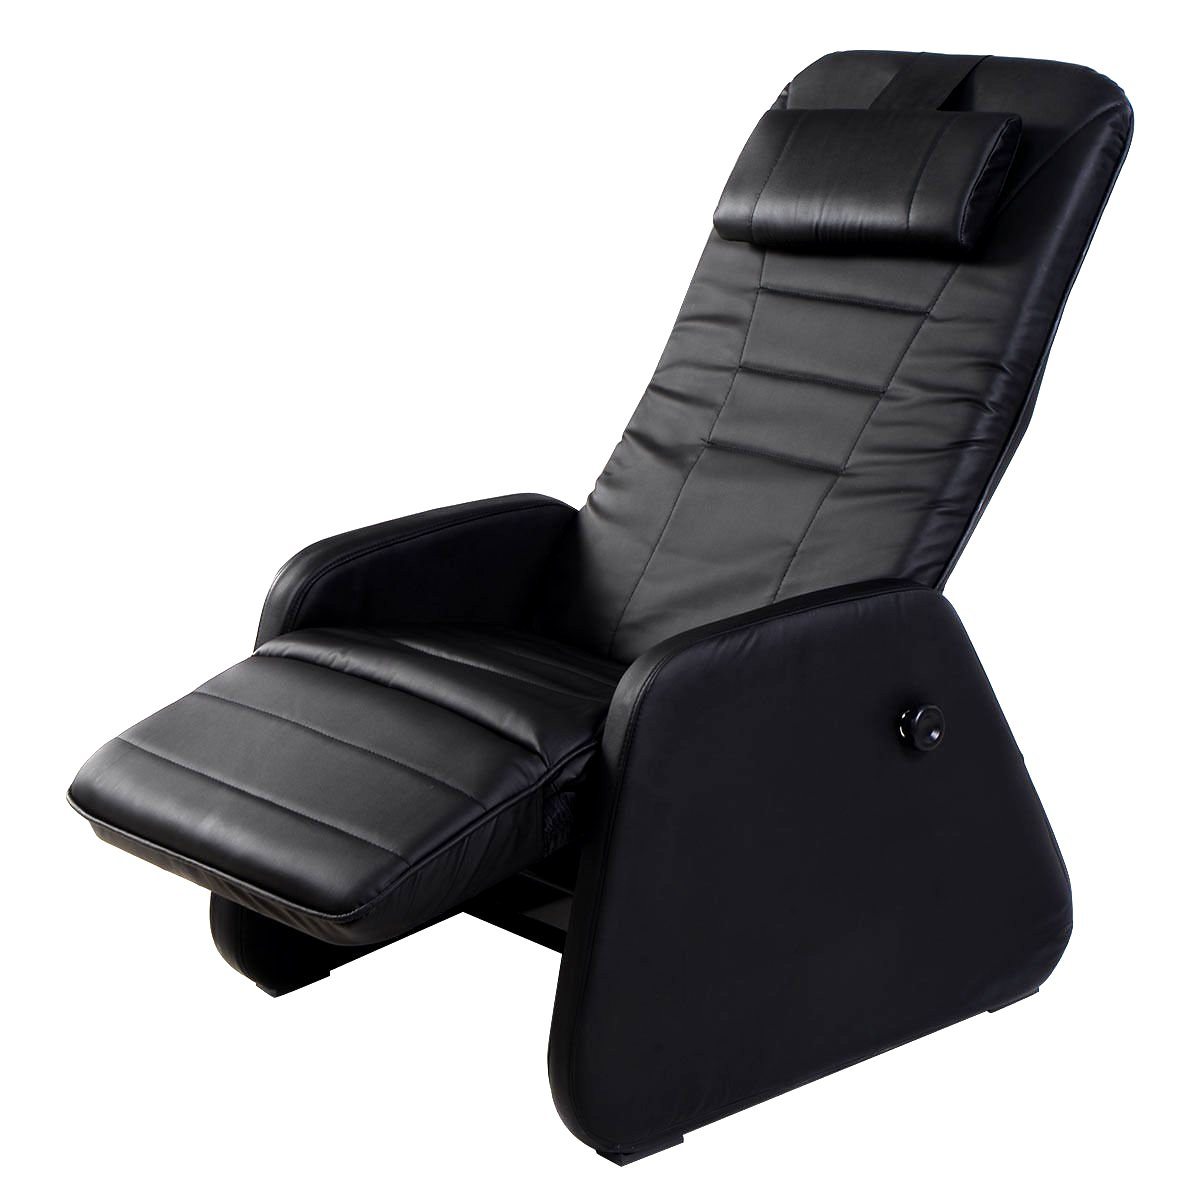 Giantex Zero Gravity Chair